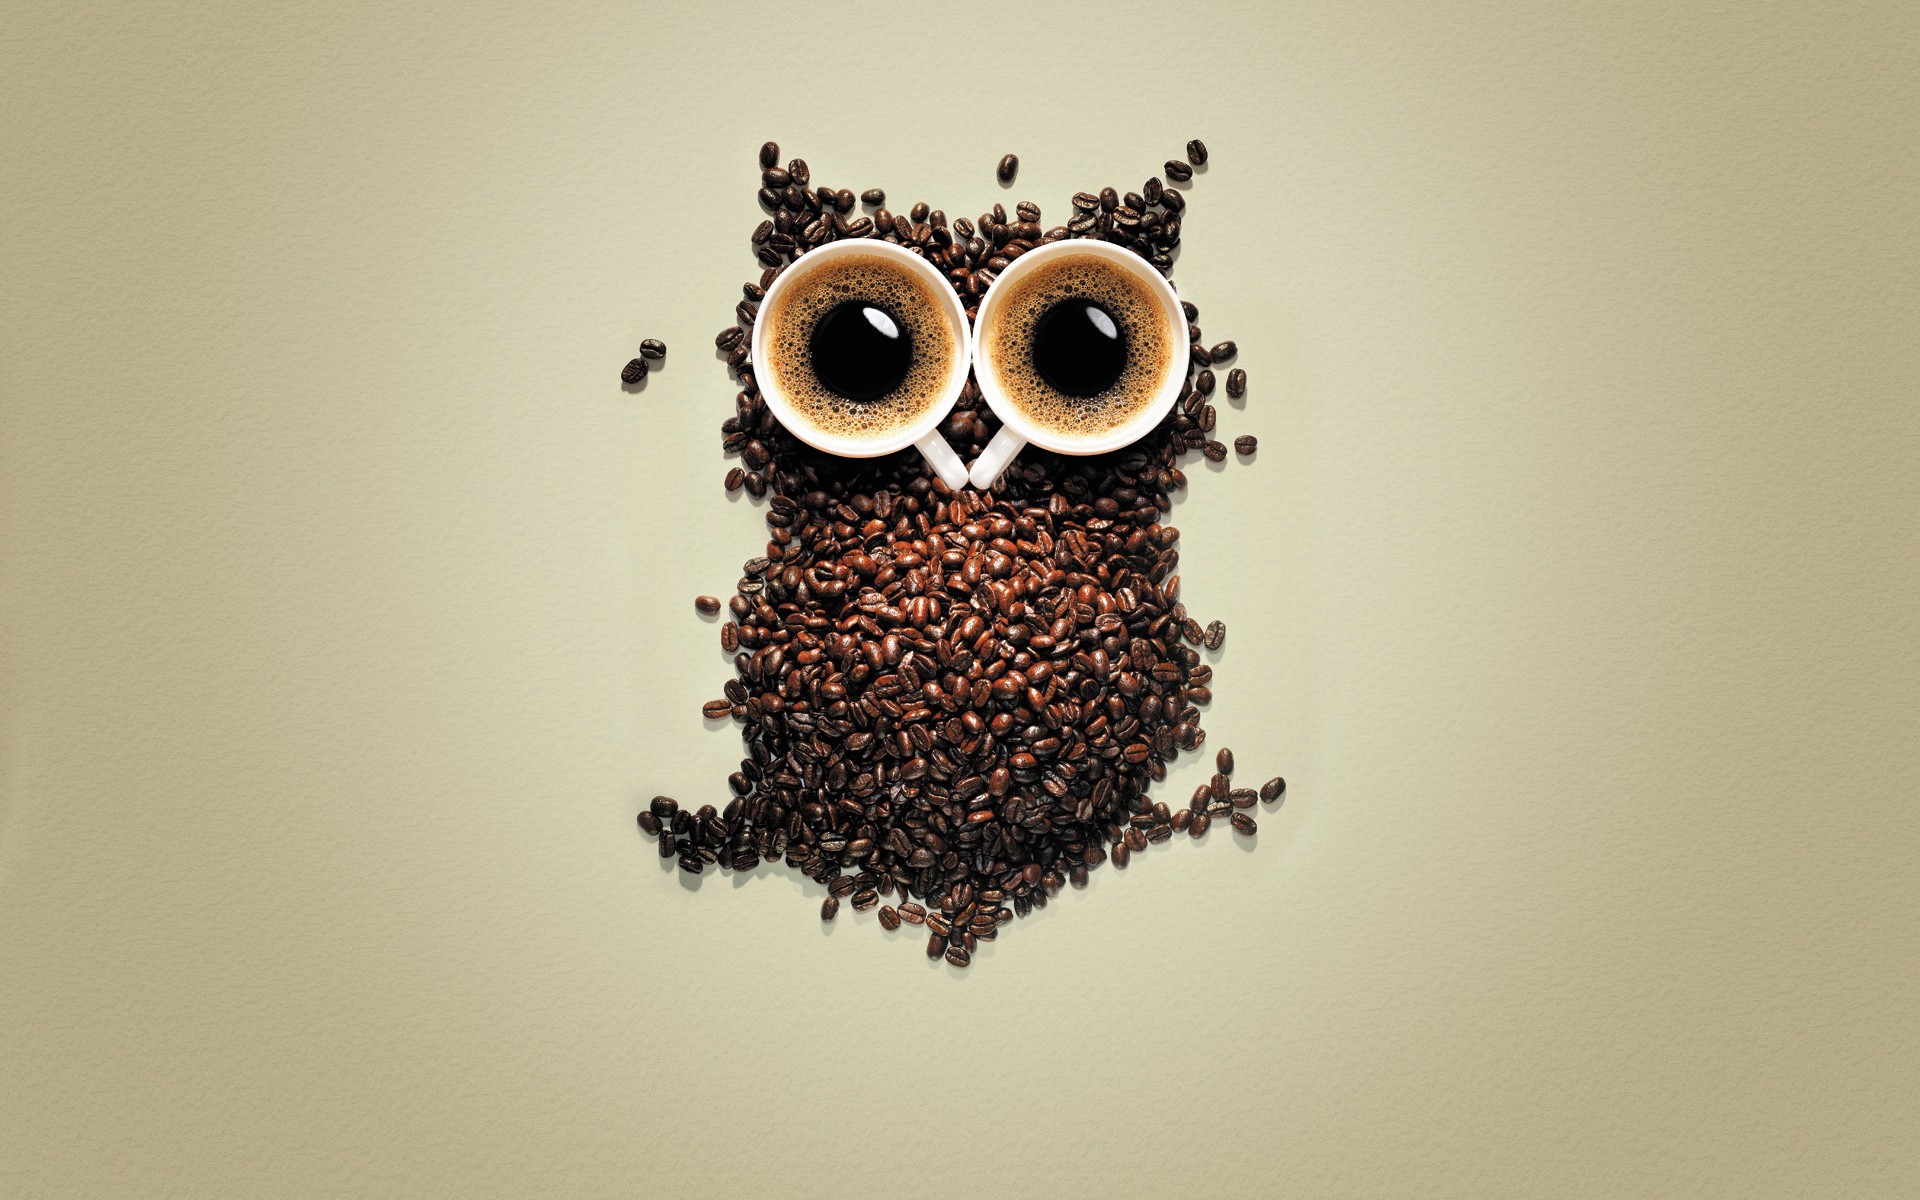 General 1920x1200 coffee owl coffee beans creativity birds animals simple background digital art cup beige